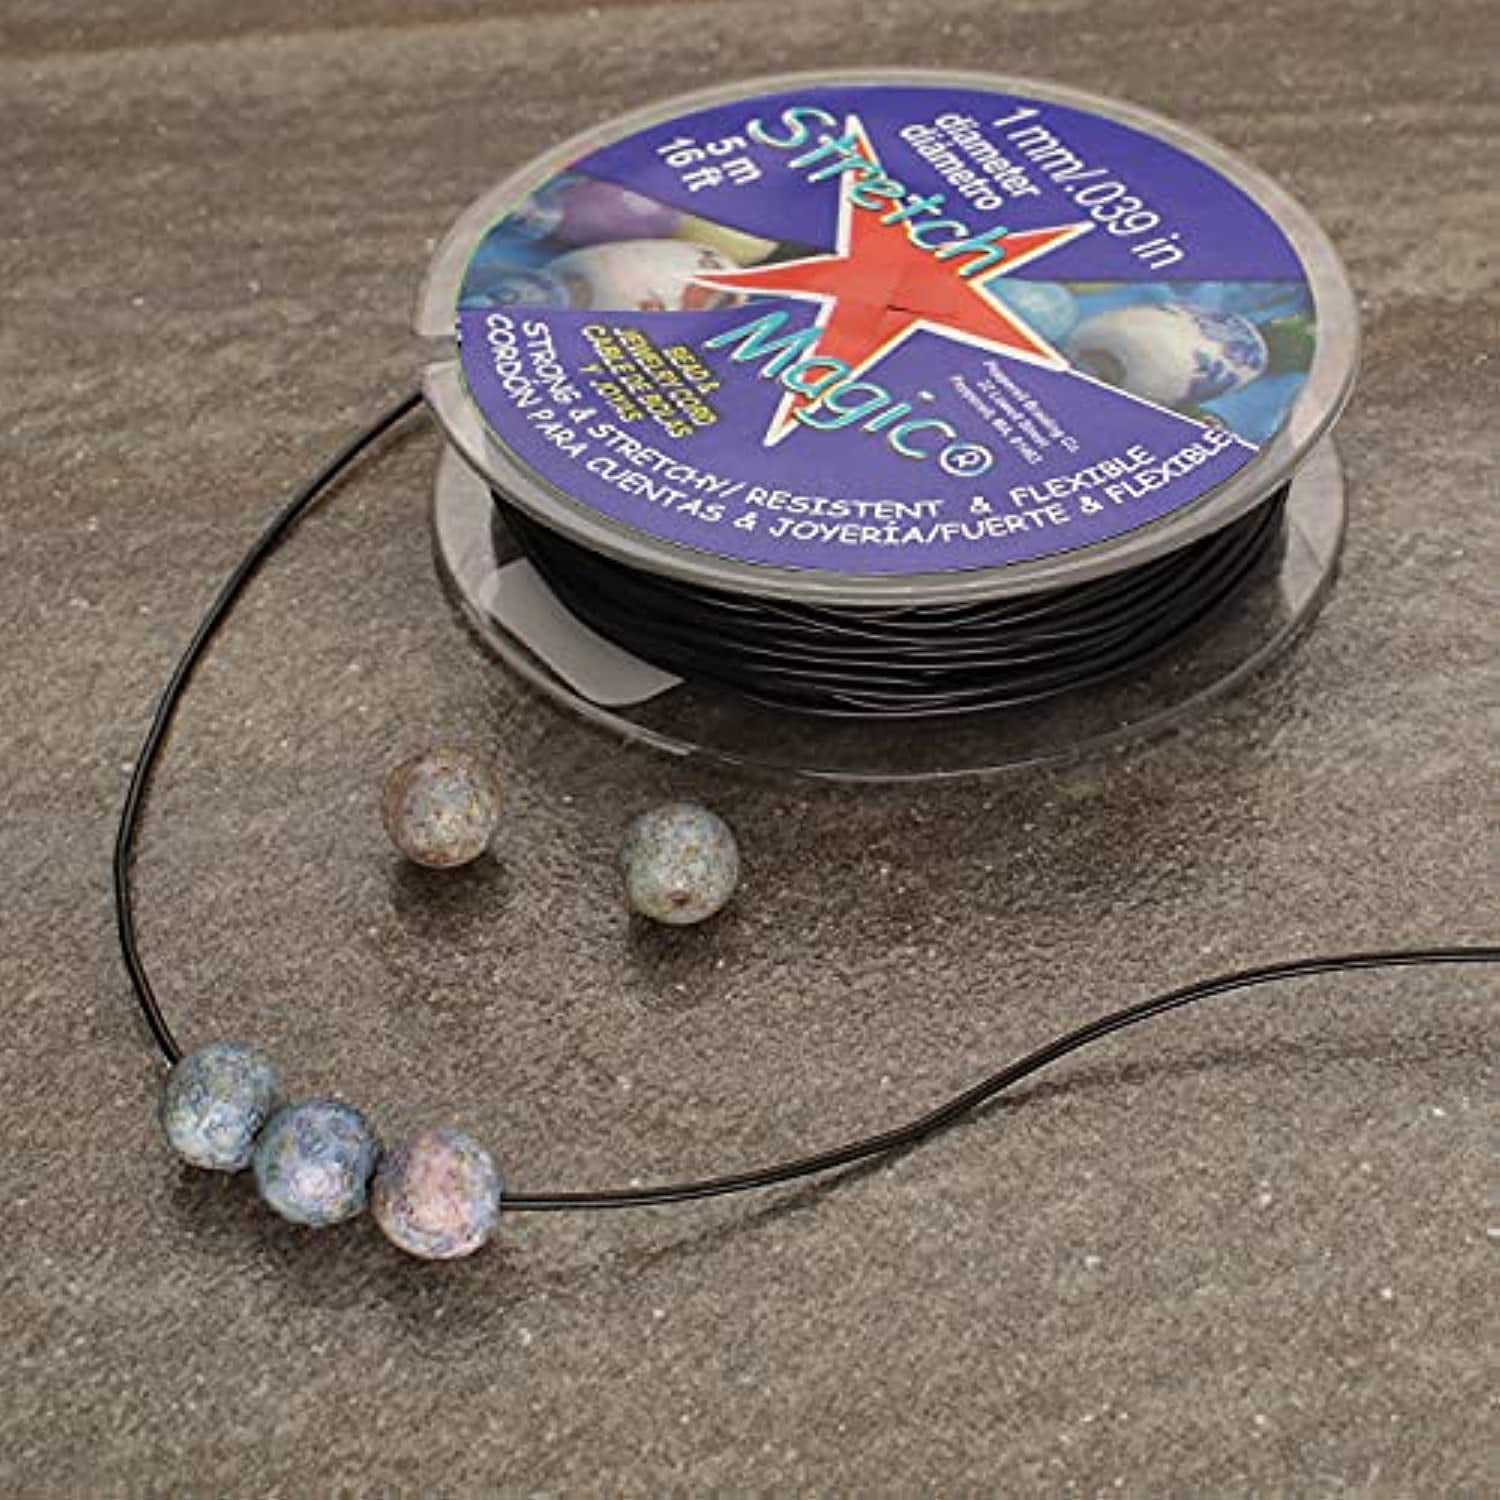 Stretch Magic® Clear Bead & Jewelry Cord, 1mm